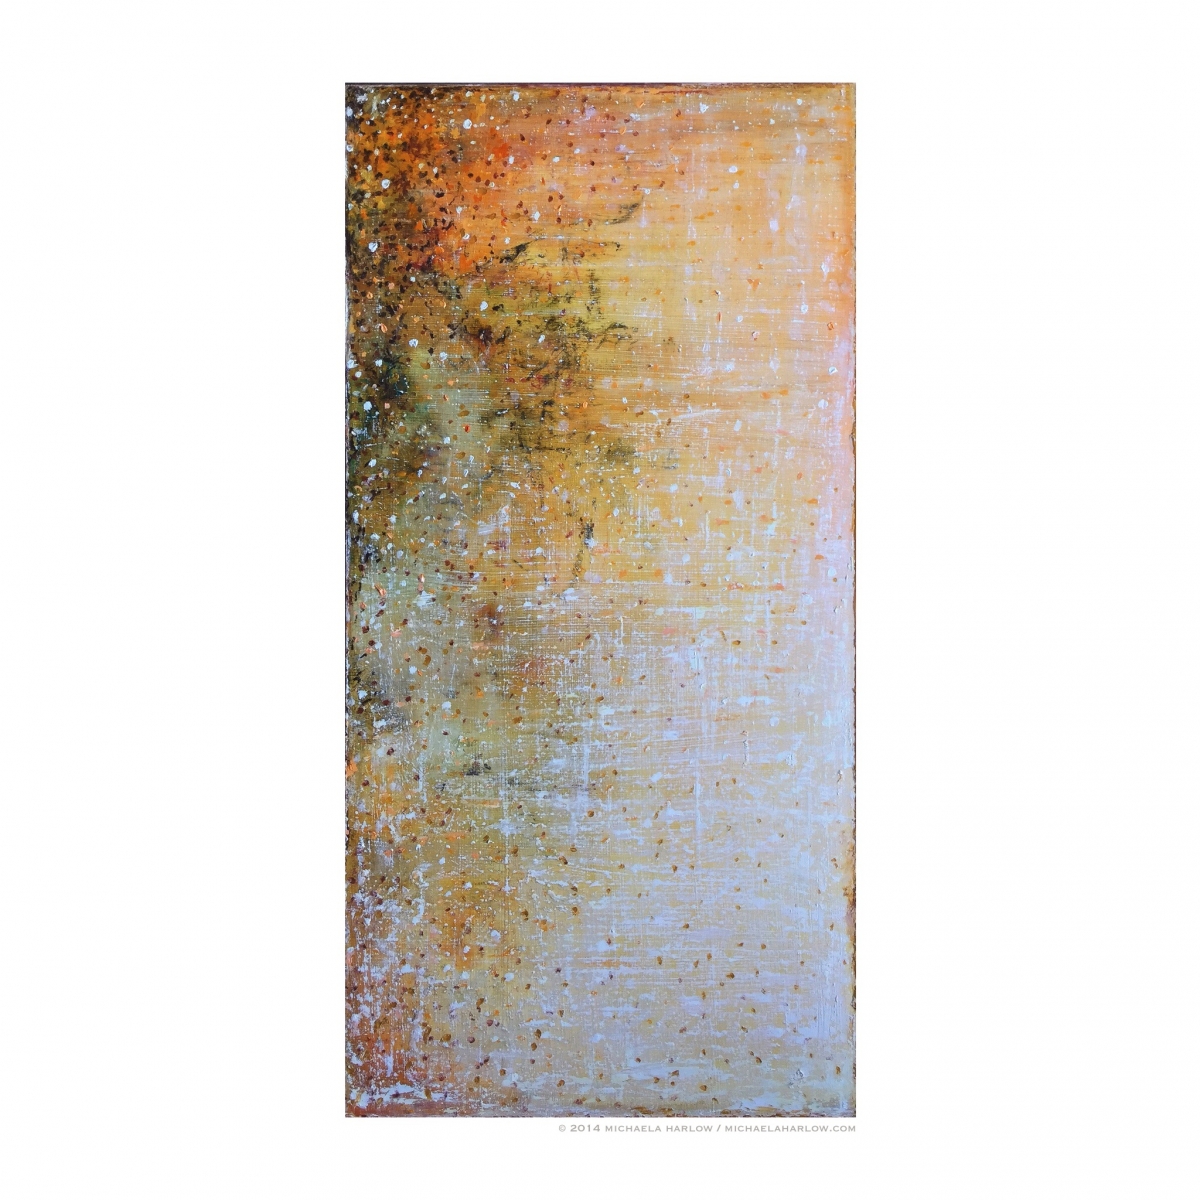 Sunlit Veneer, 2014. Oil on Wood Panel.